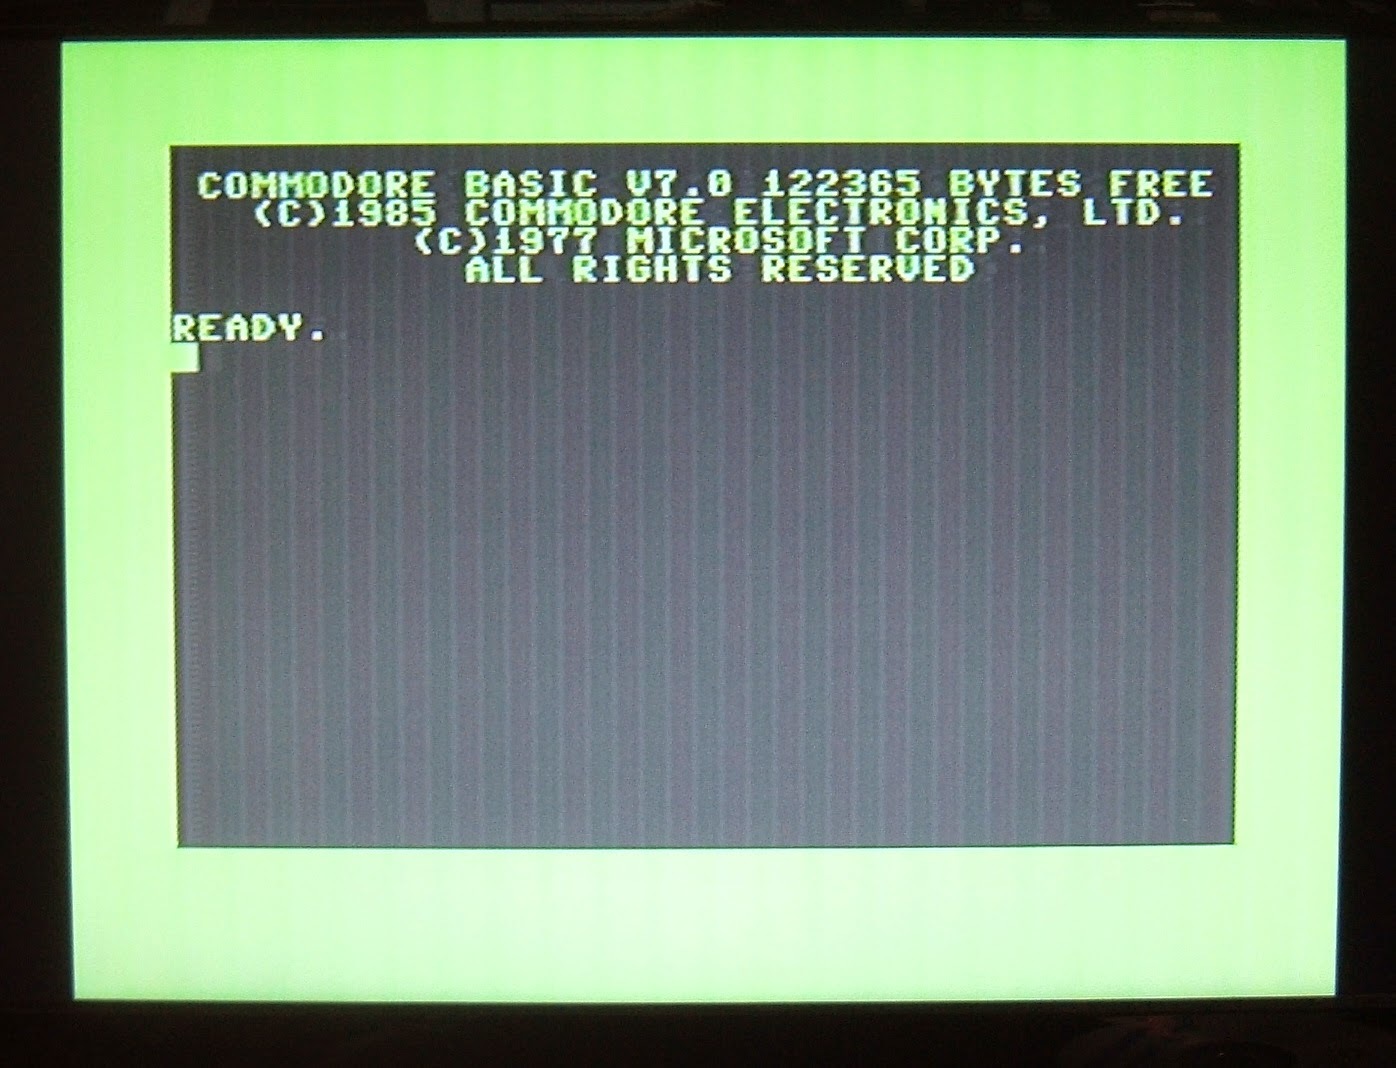 Commodore 128 download for raspberry pi